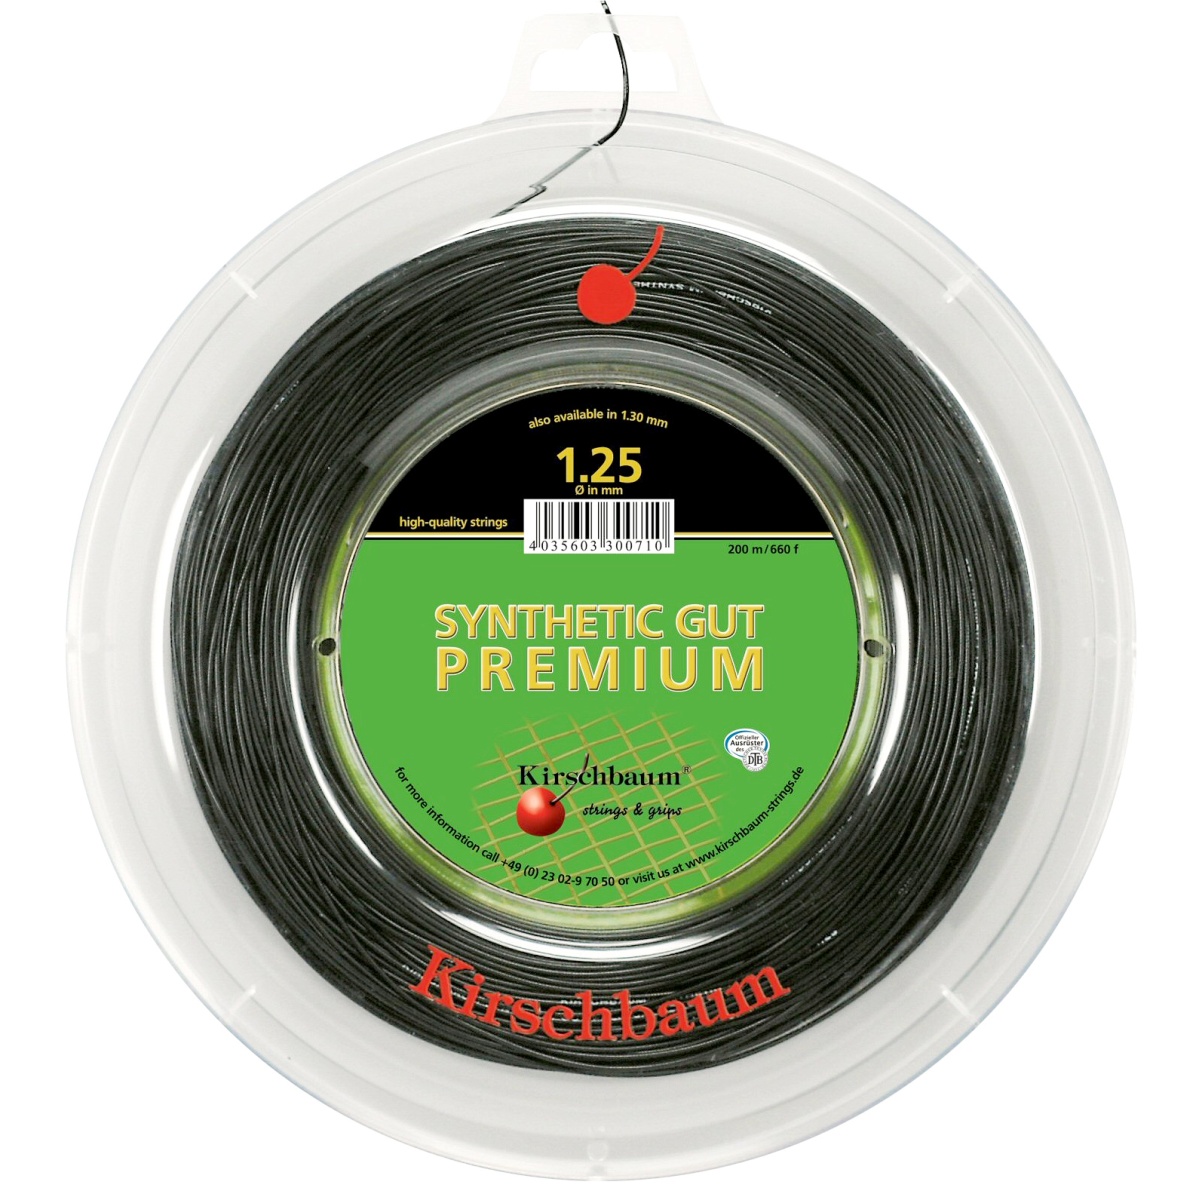 Kirschbaum Synthetic Gut Premium 1,25 mm 200 m Tennissaiten 0,26€/m 